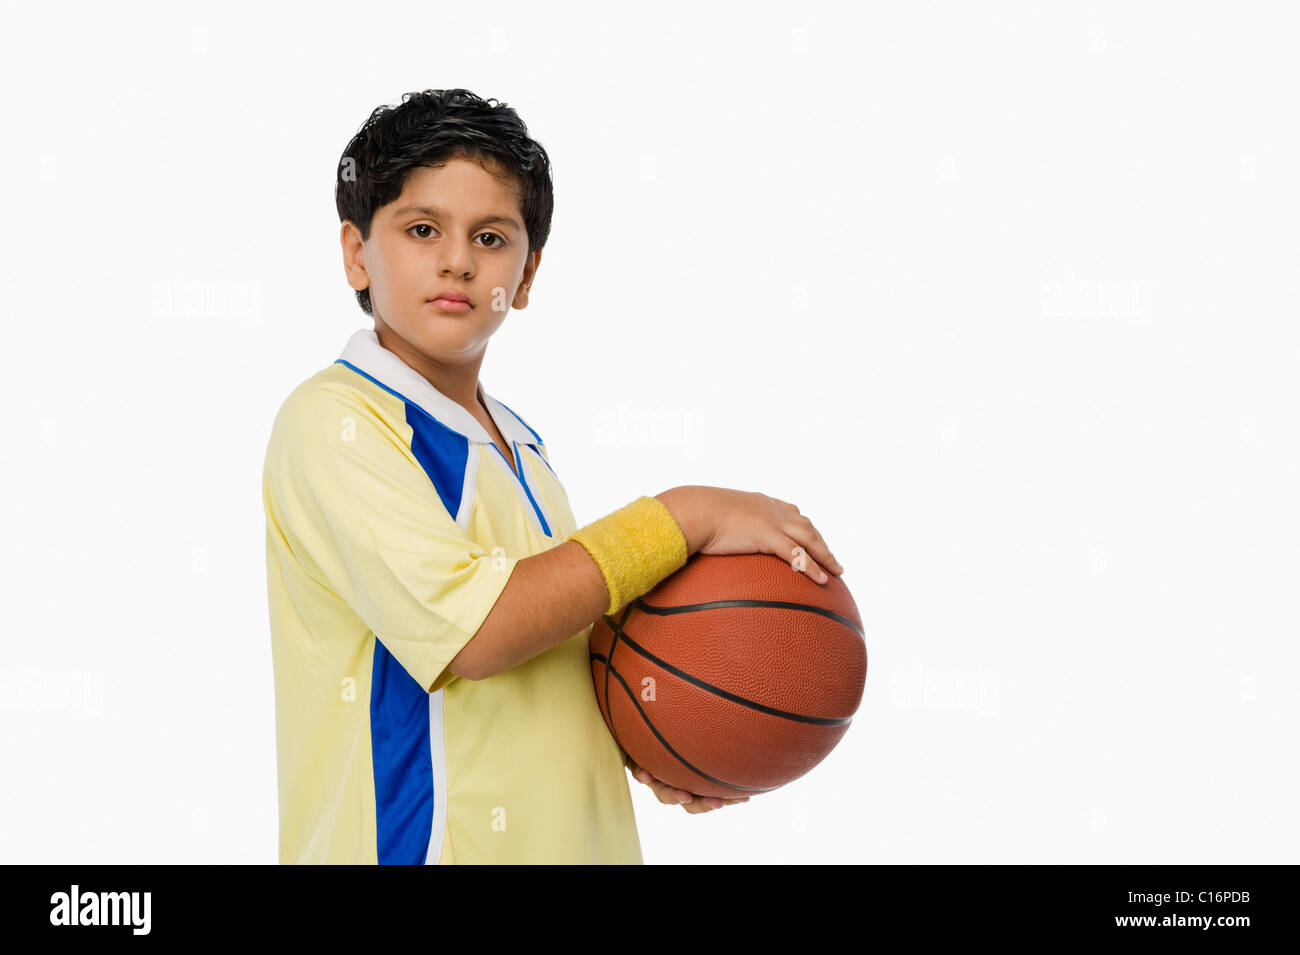 Portrait of a Boy holding a basket-ball Banque D'Images